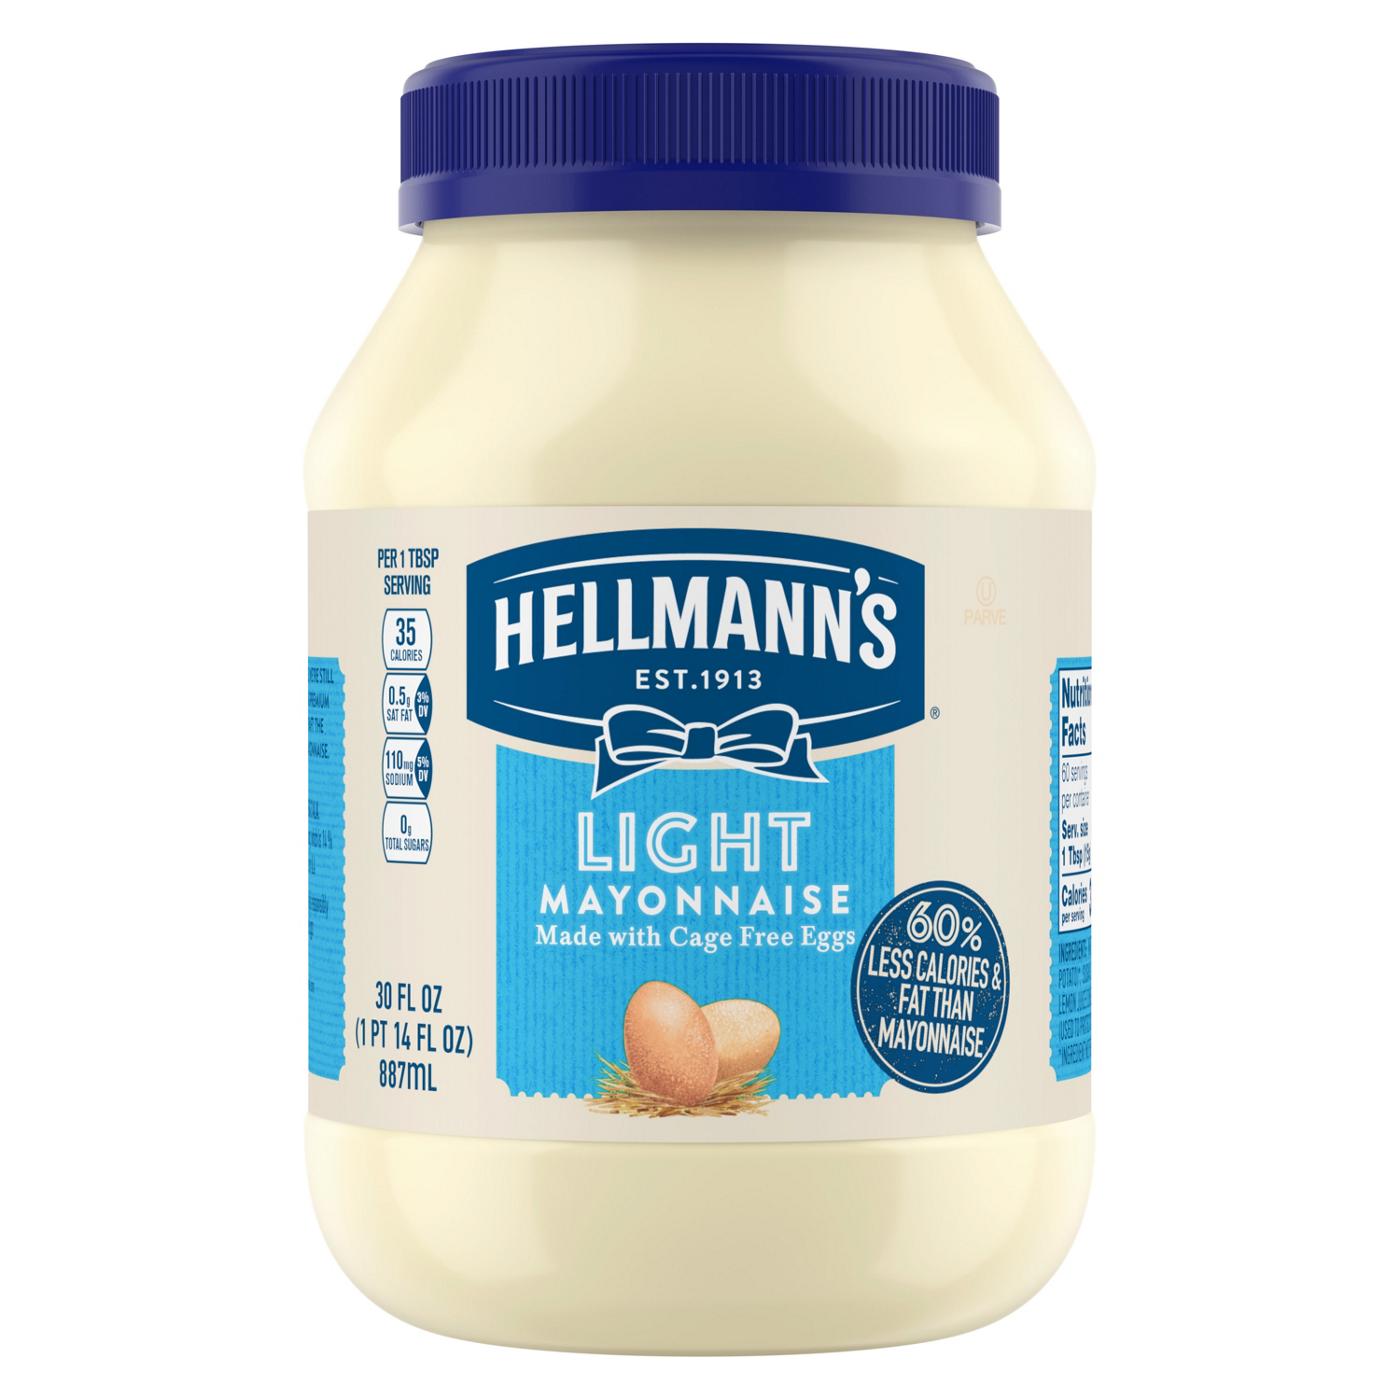 Hellmann's Light Mayonnaise Light Mayo; image 1 of 10